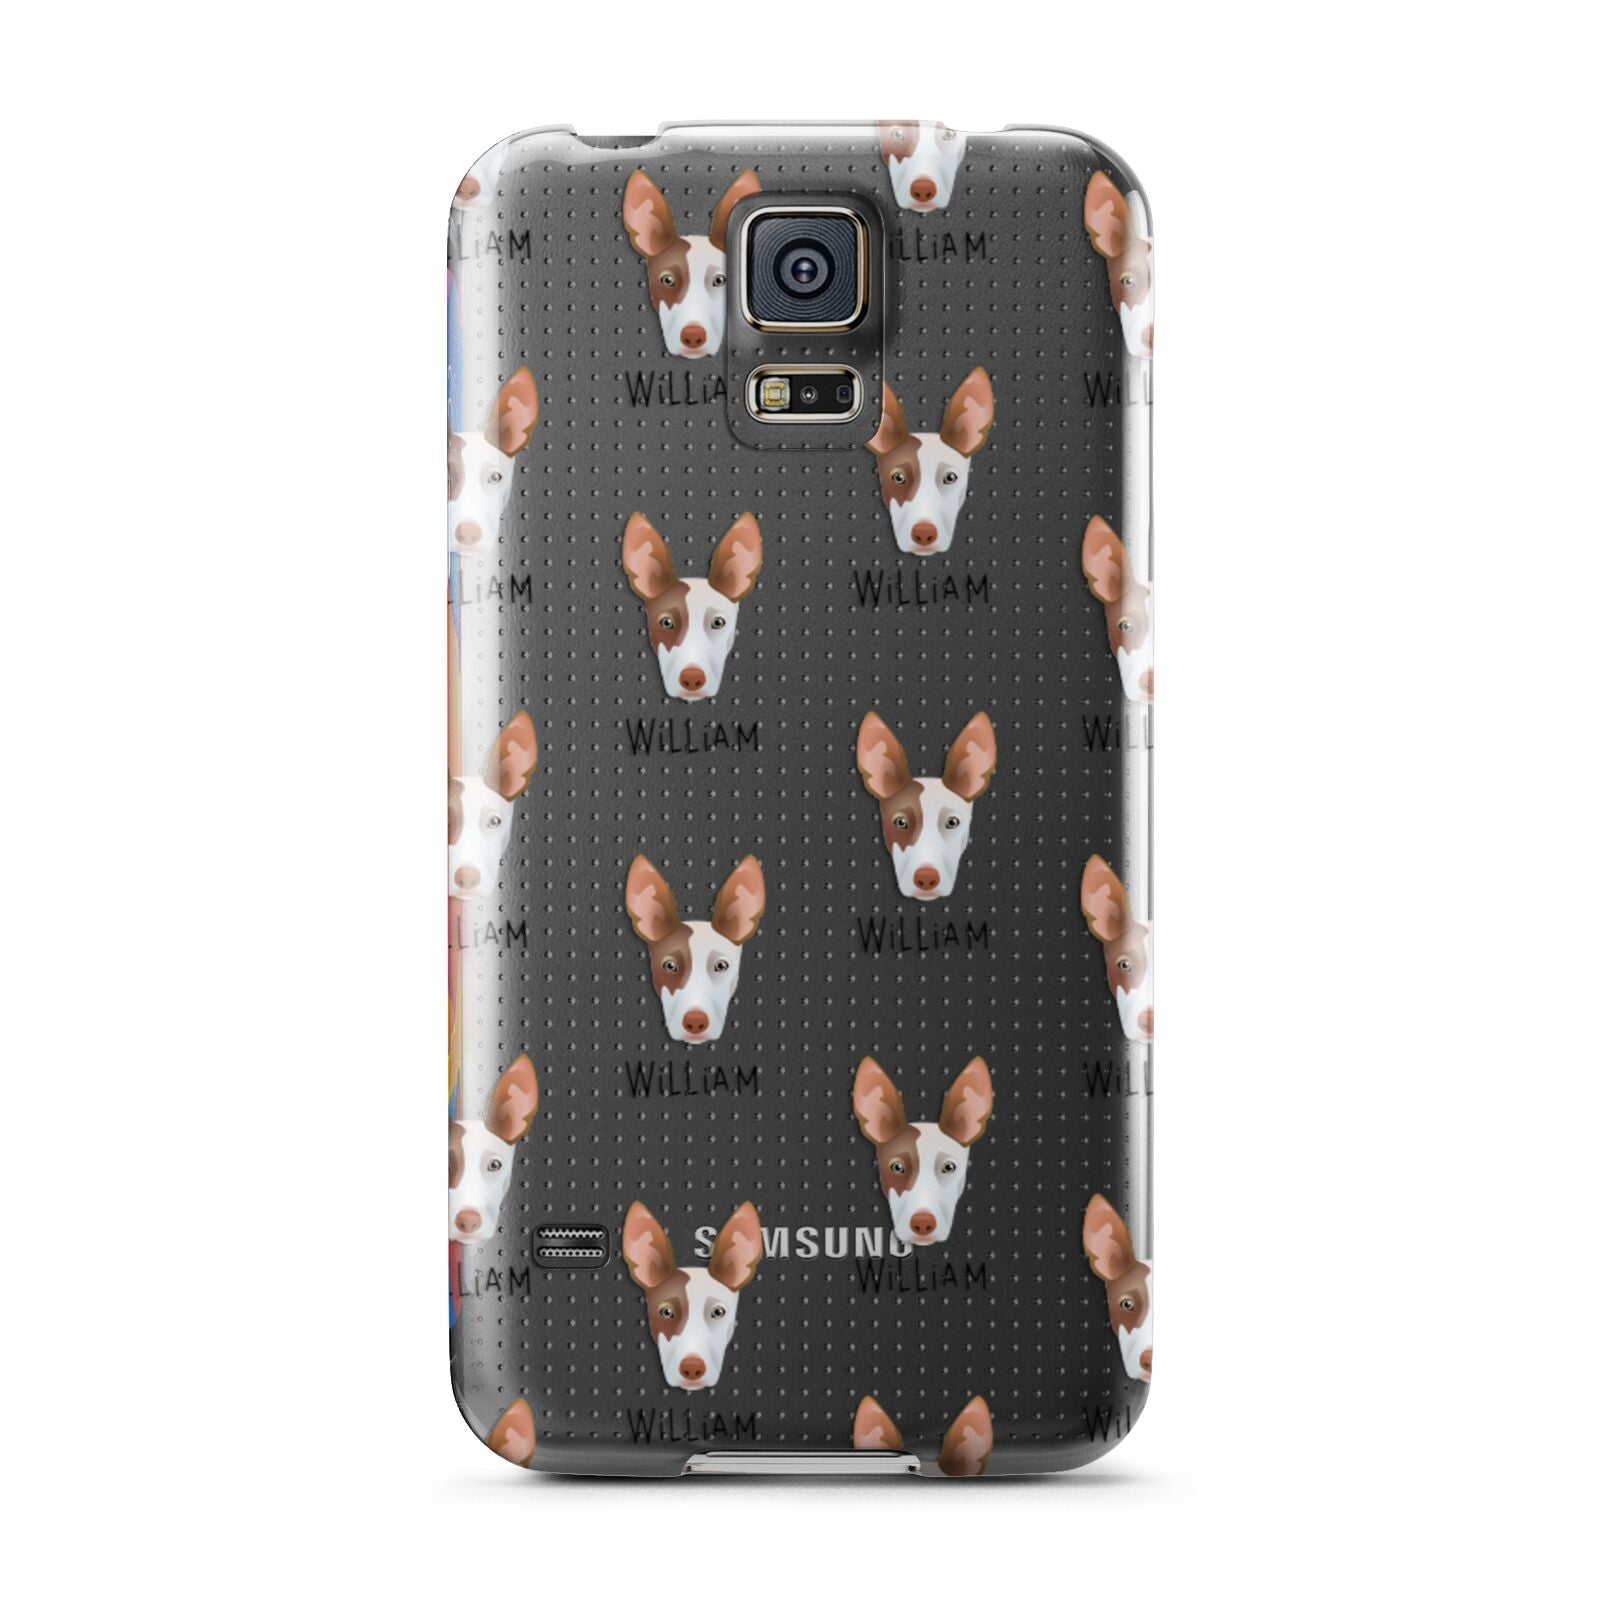 Ibizan Hound Icon with Name Samsung Galaxy S5 Case